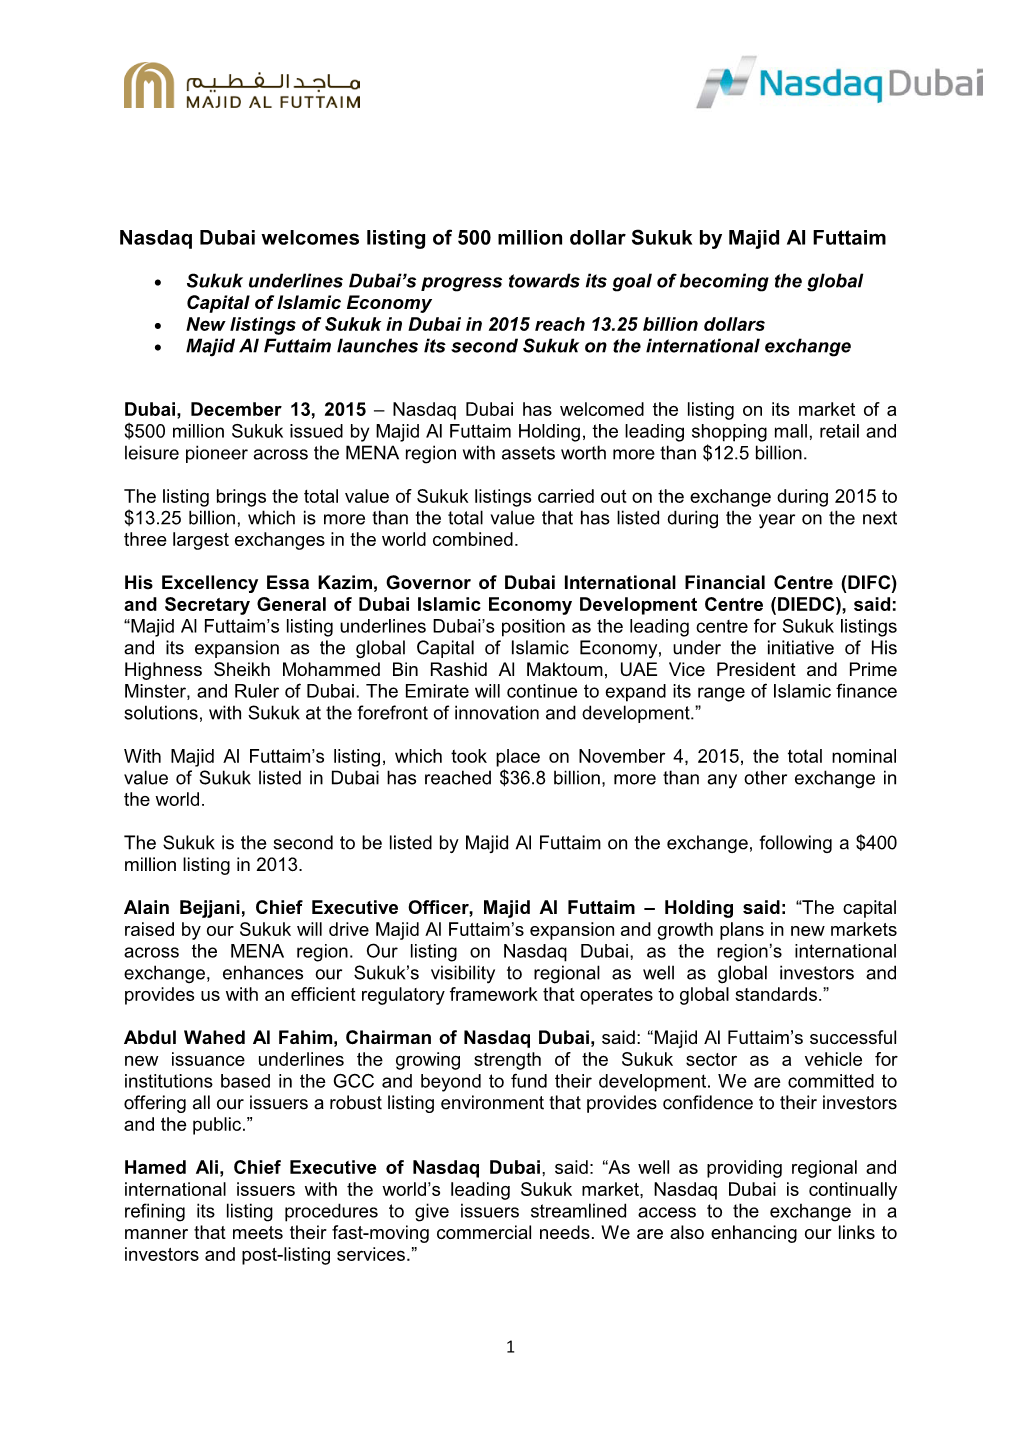 Nasdaq Dubai Welcomes Listing of 500 Million Dollar Sukuk by Majid Al Futtaim